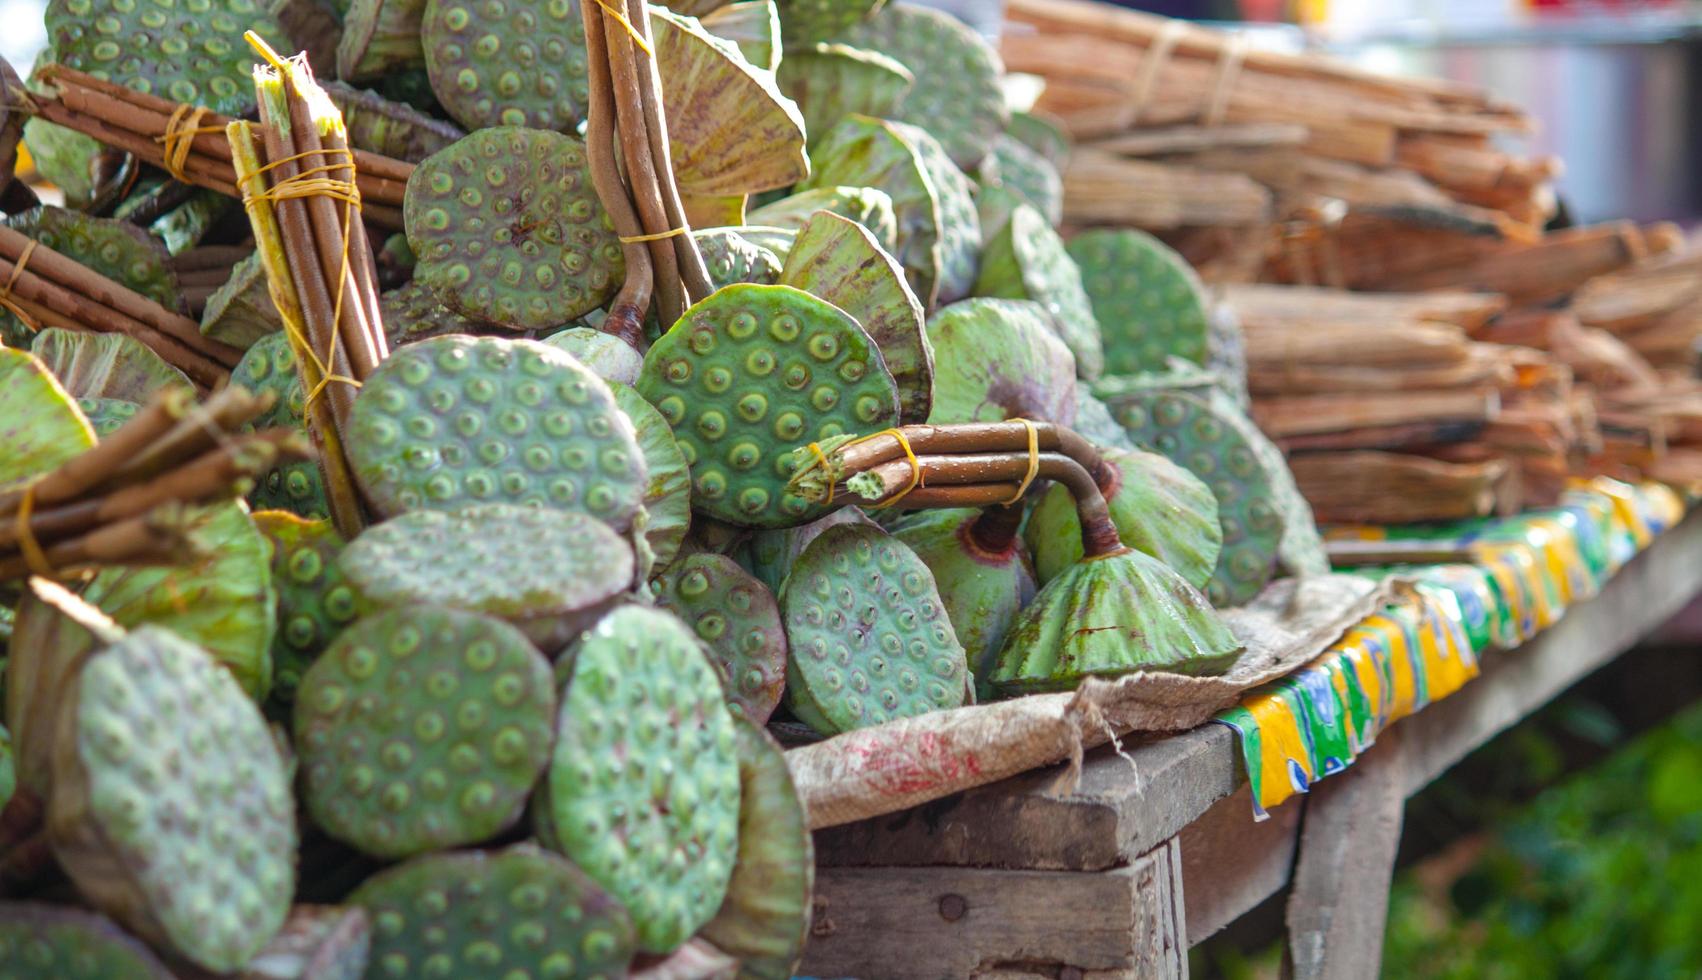 kaktusar på en marknad foto